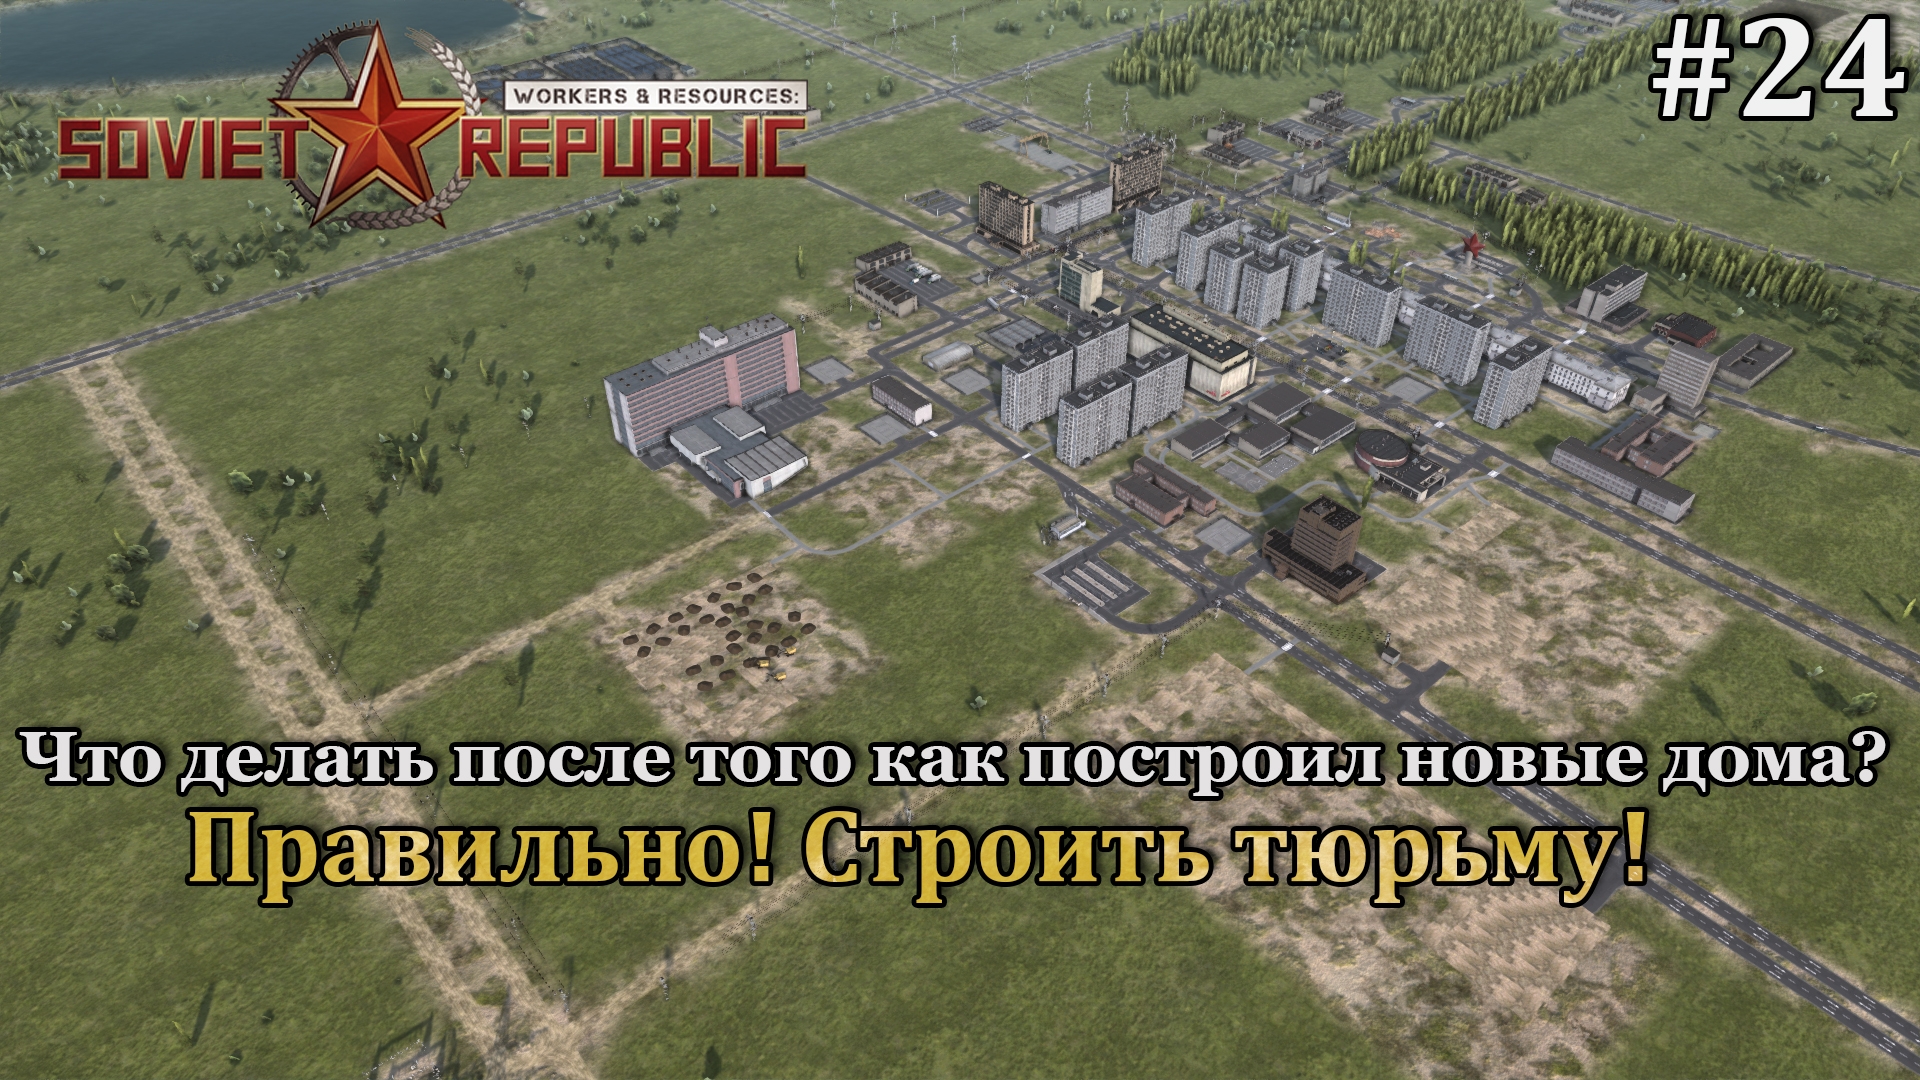 Workers & Resources: Soviet Republic Новая республика! #24